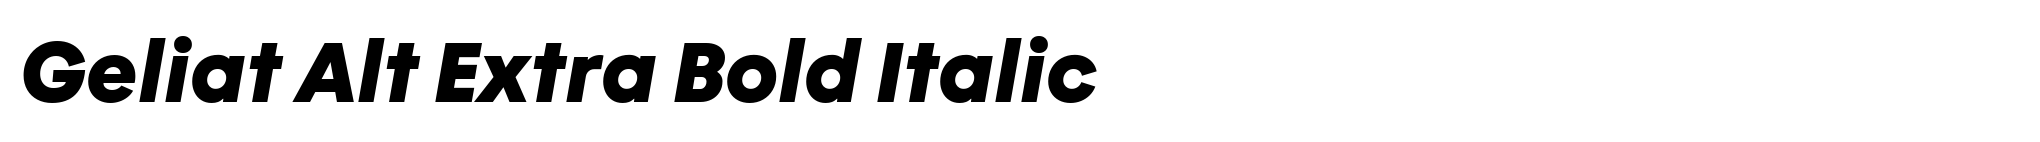 Geliat Alt Extra Bold Italic image